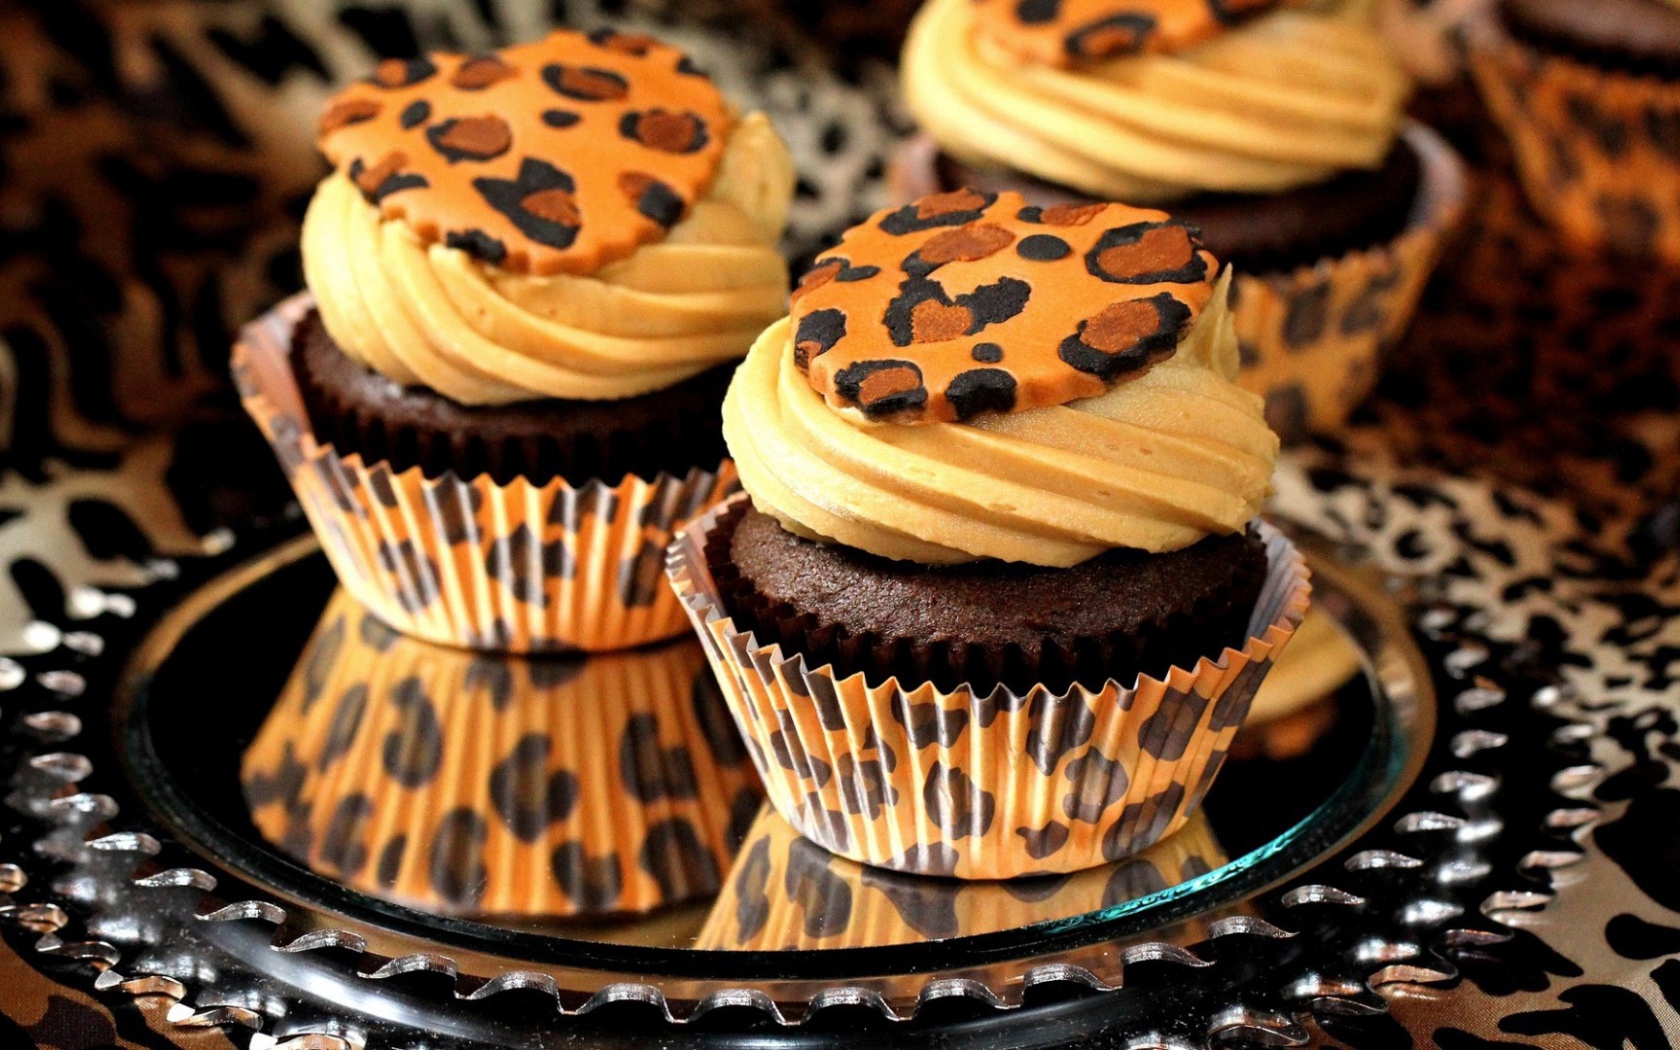 Tiger cupcakes